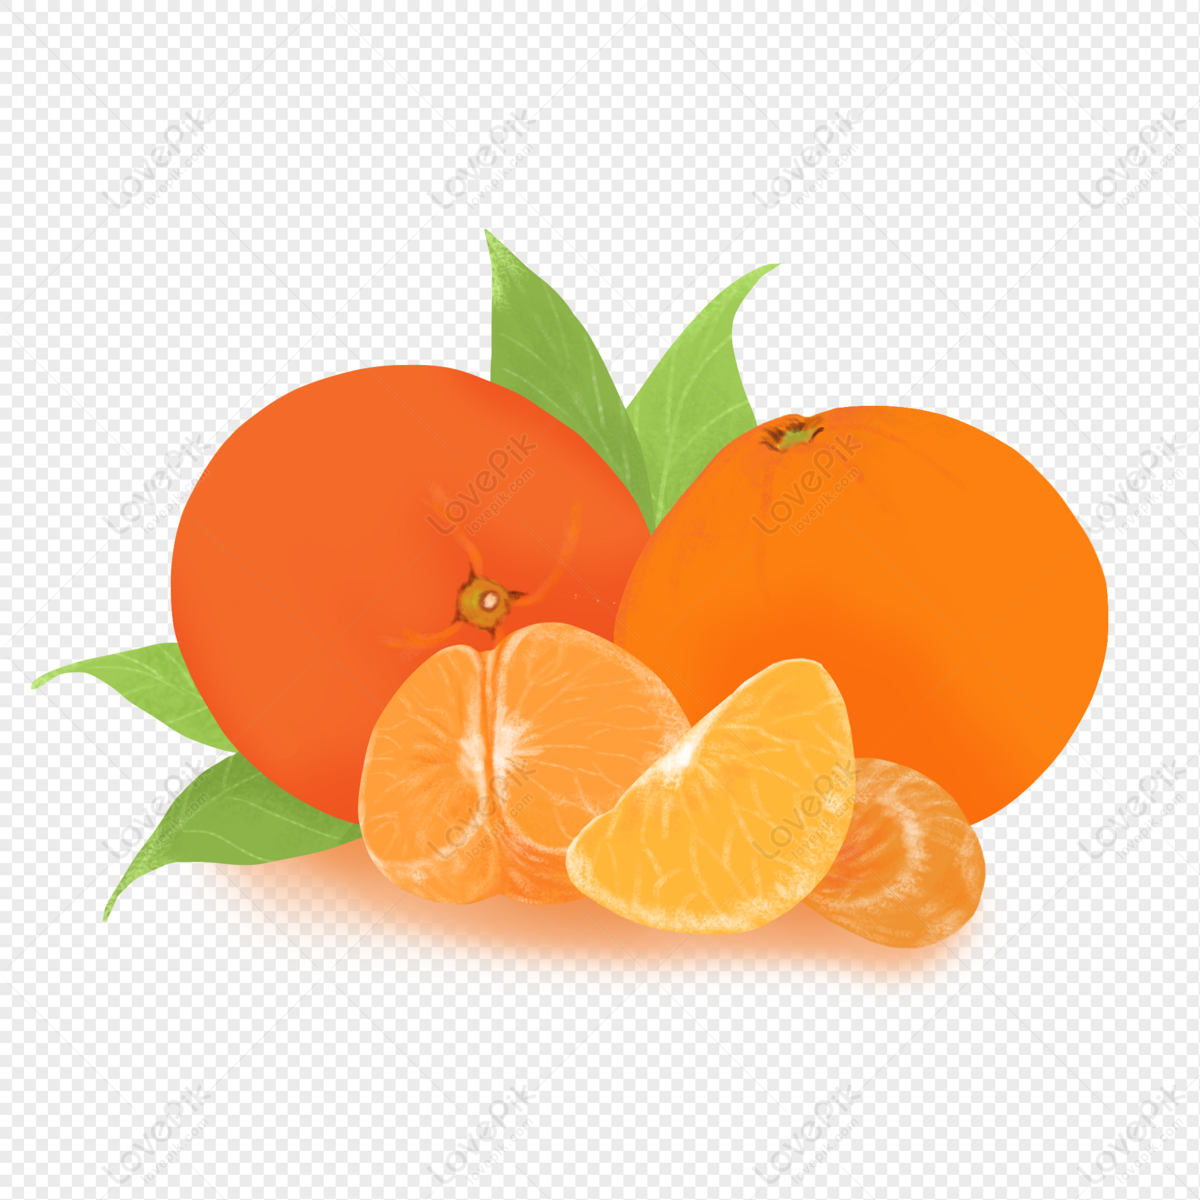 Fruit Orange Orange Cartoon Hand Drawn PNG White Transparent And Clipart  Image For Free Download - Lovepik | 401552022